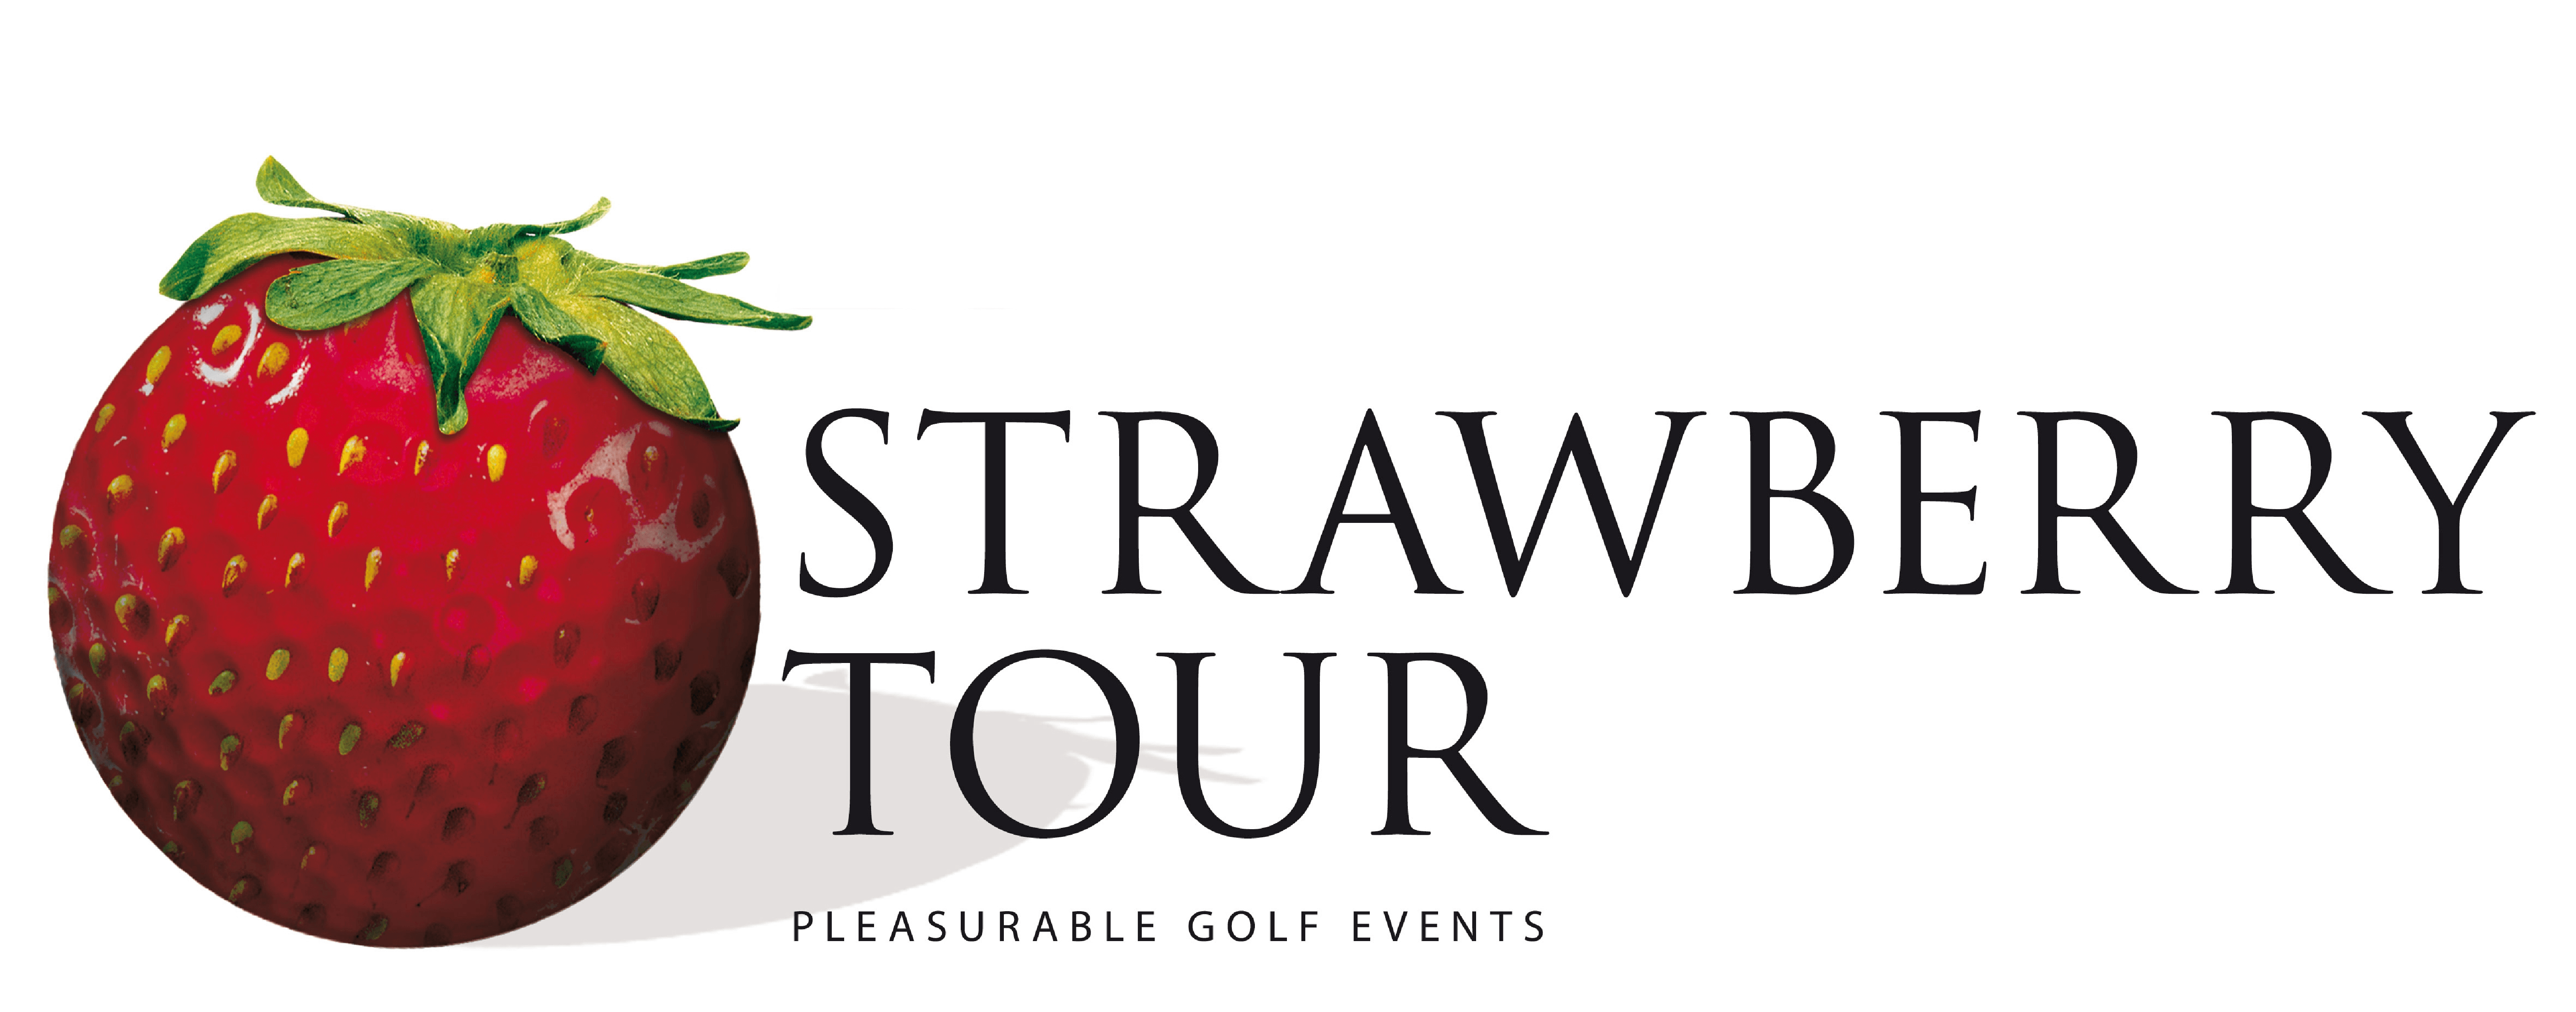 strawberry tour kontakt